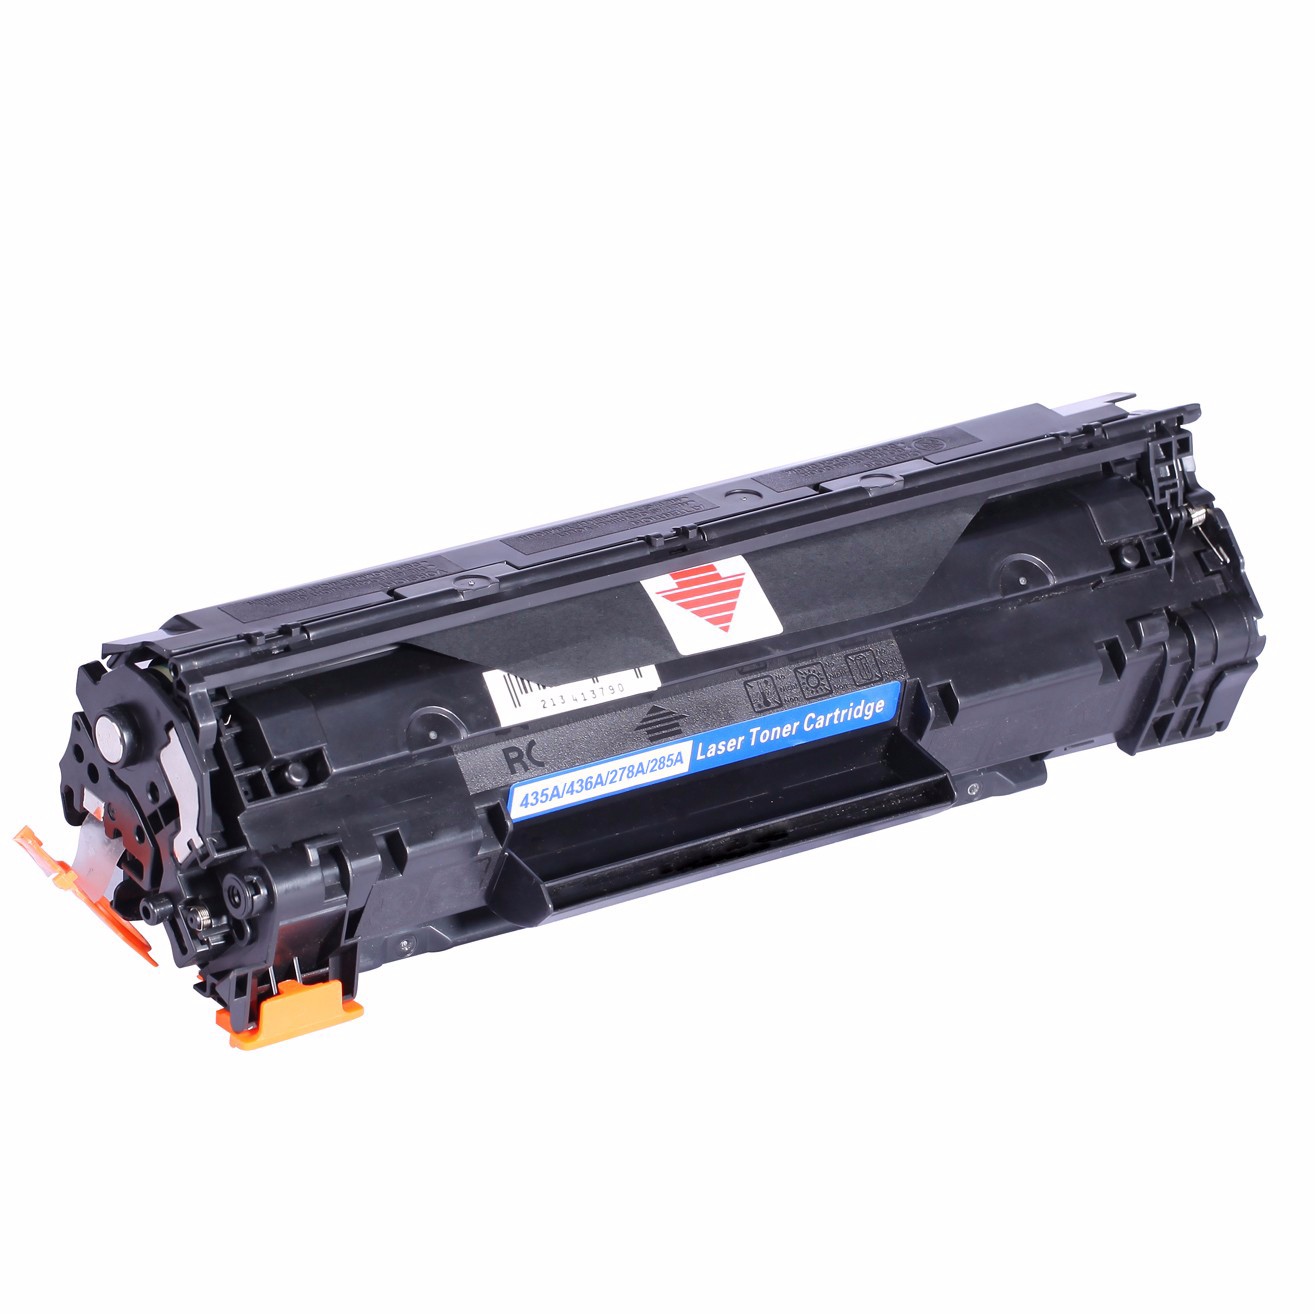 Compatible toner cartridge for HP 435A/436A/278A/285A